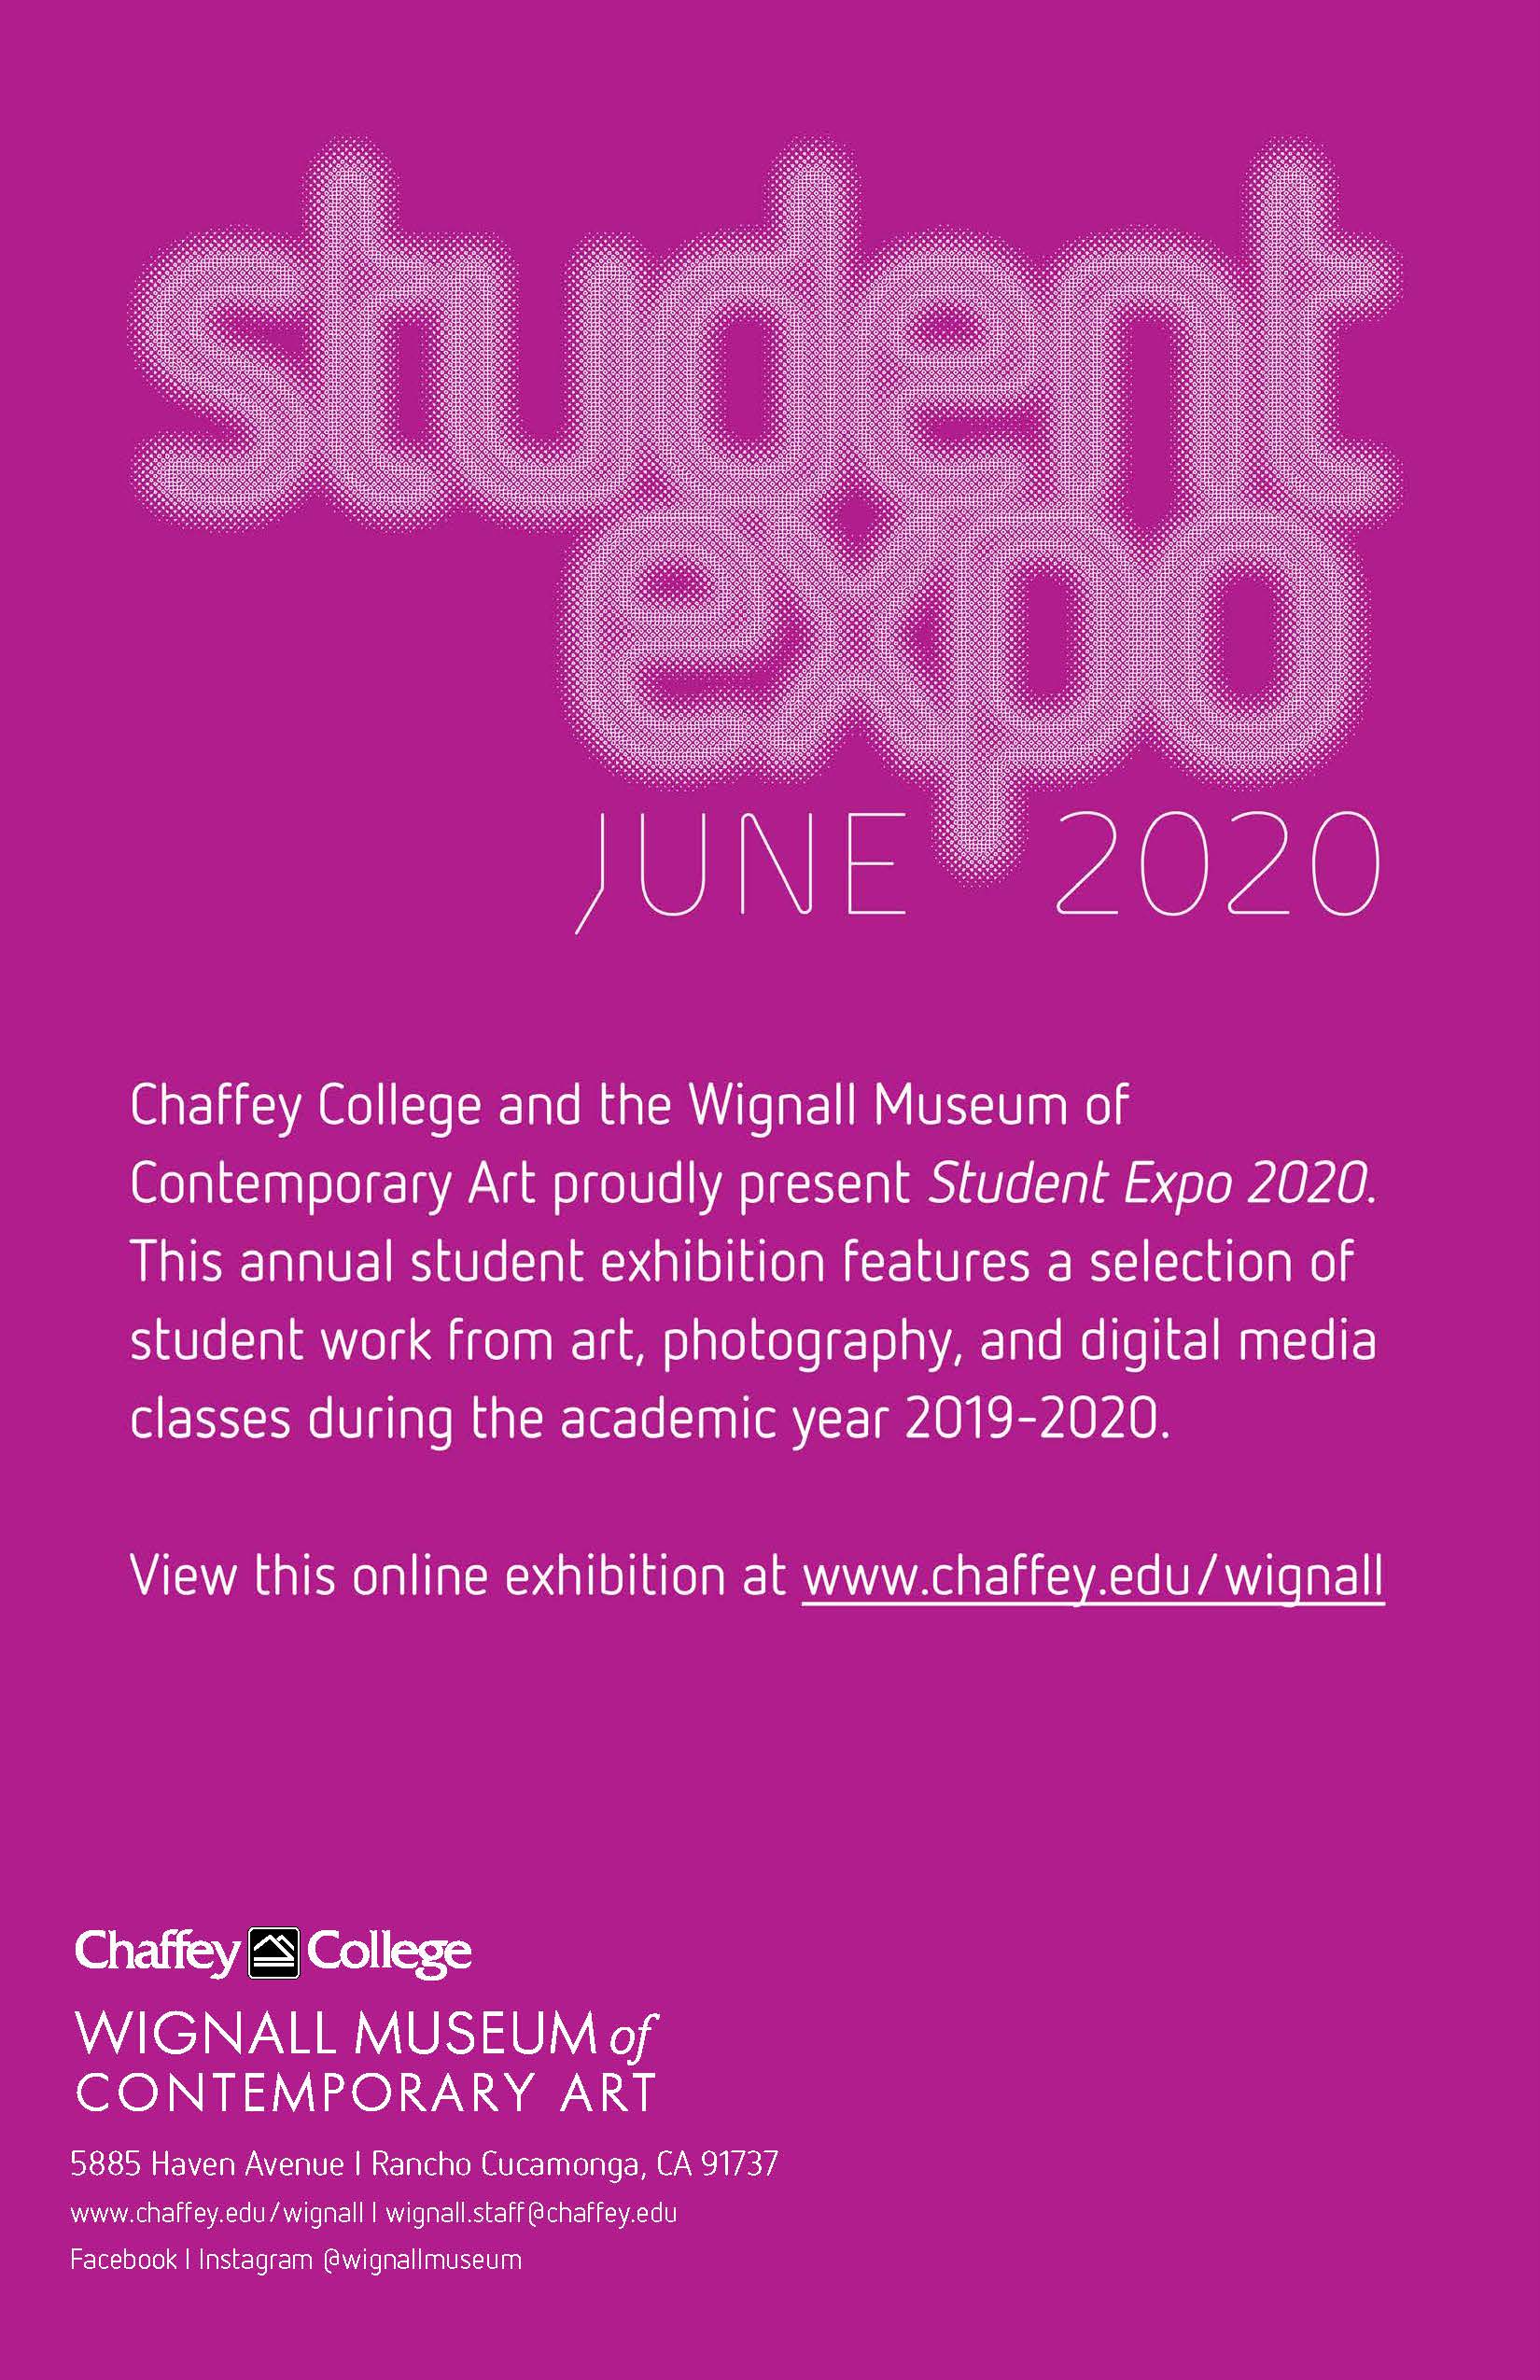 Student Expo 2020